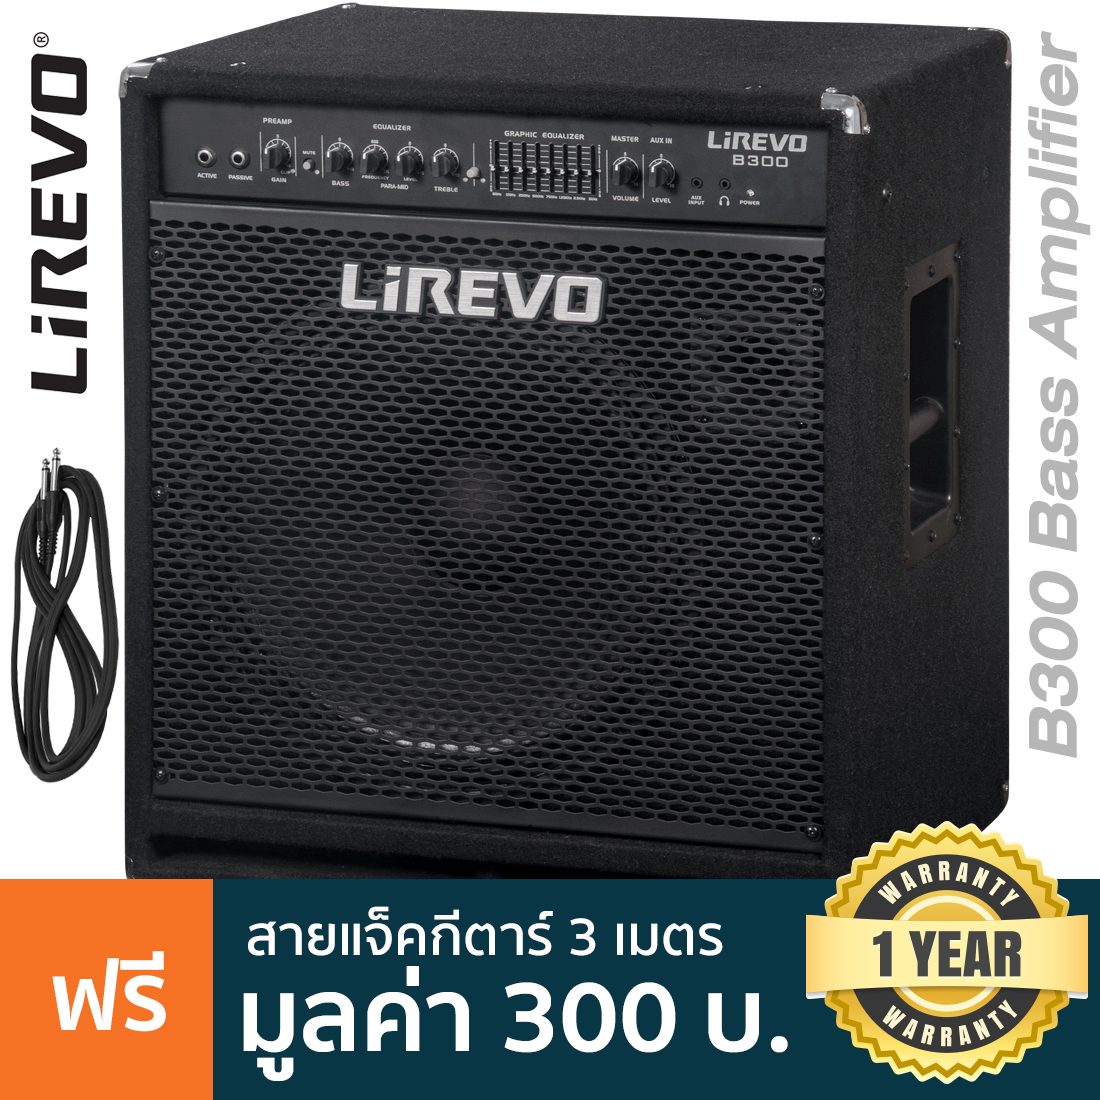 Lirevo® Professional Bass Amp B300 แอมป์เบส 300 วัตต์ มีลำโพงทวีตเตอร์ 2